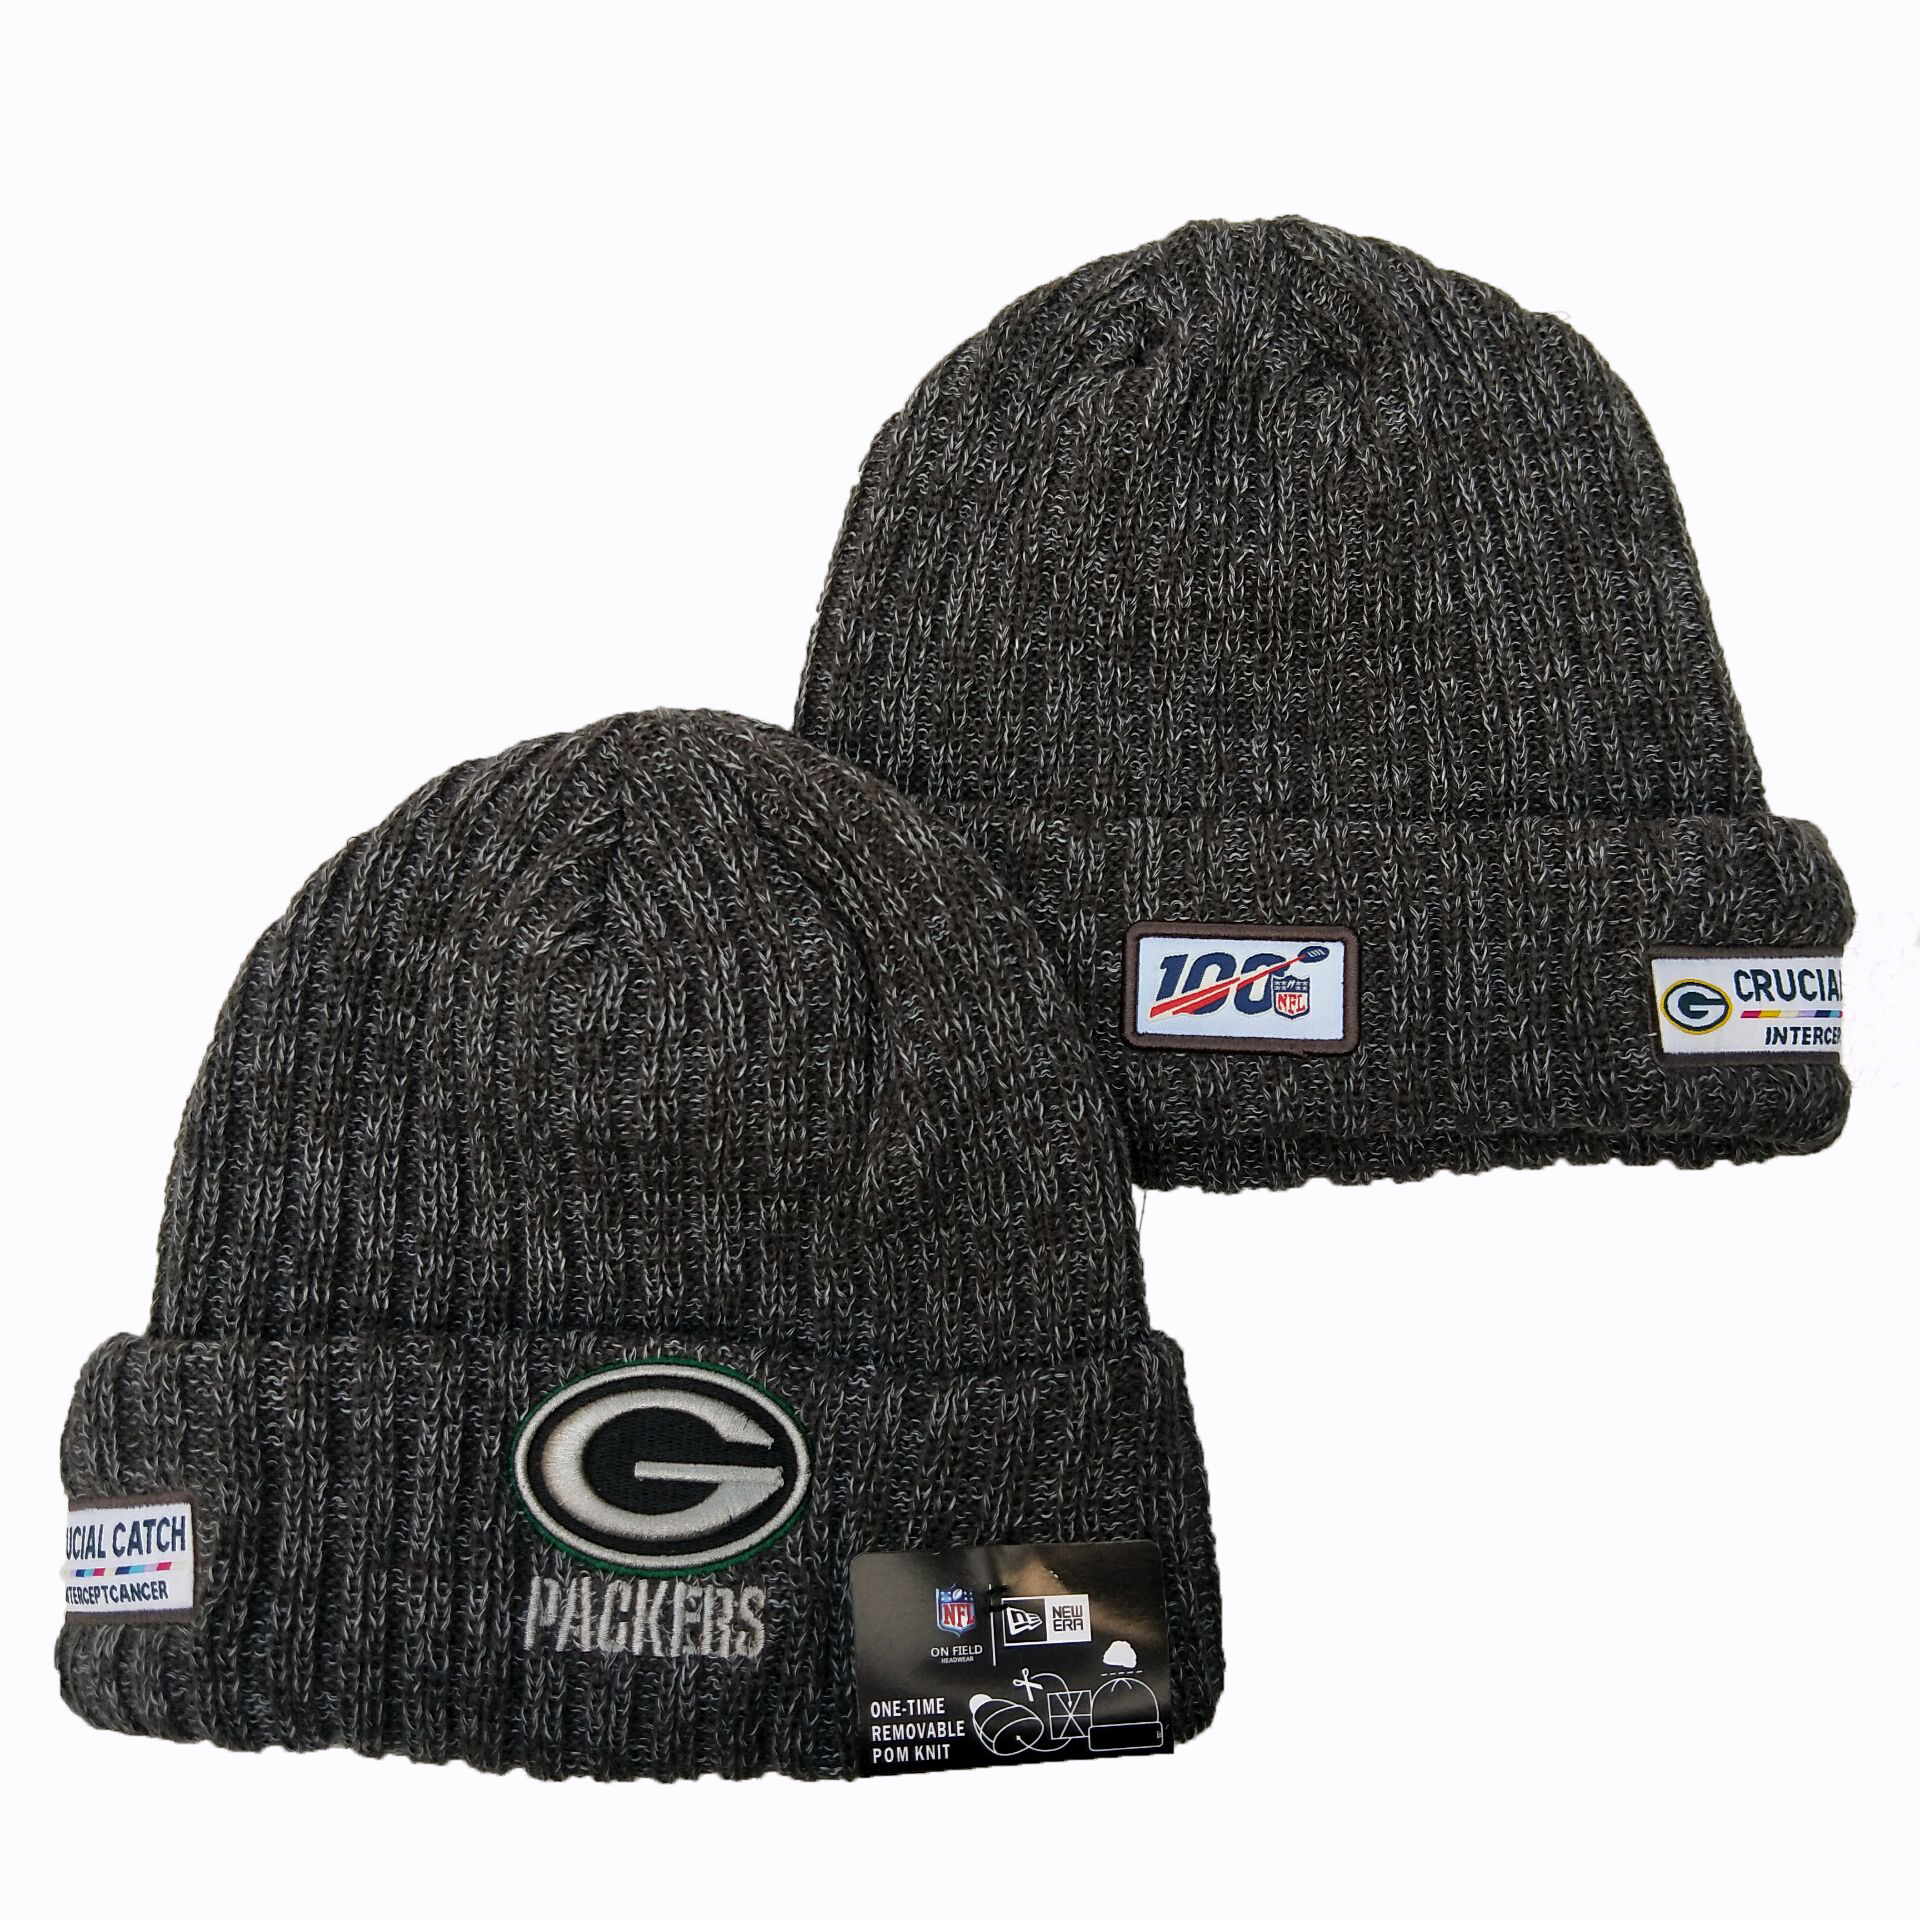 Packers Team Logo Gray 100th Season Pom Knit Hat YD